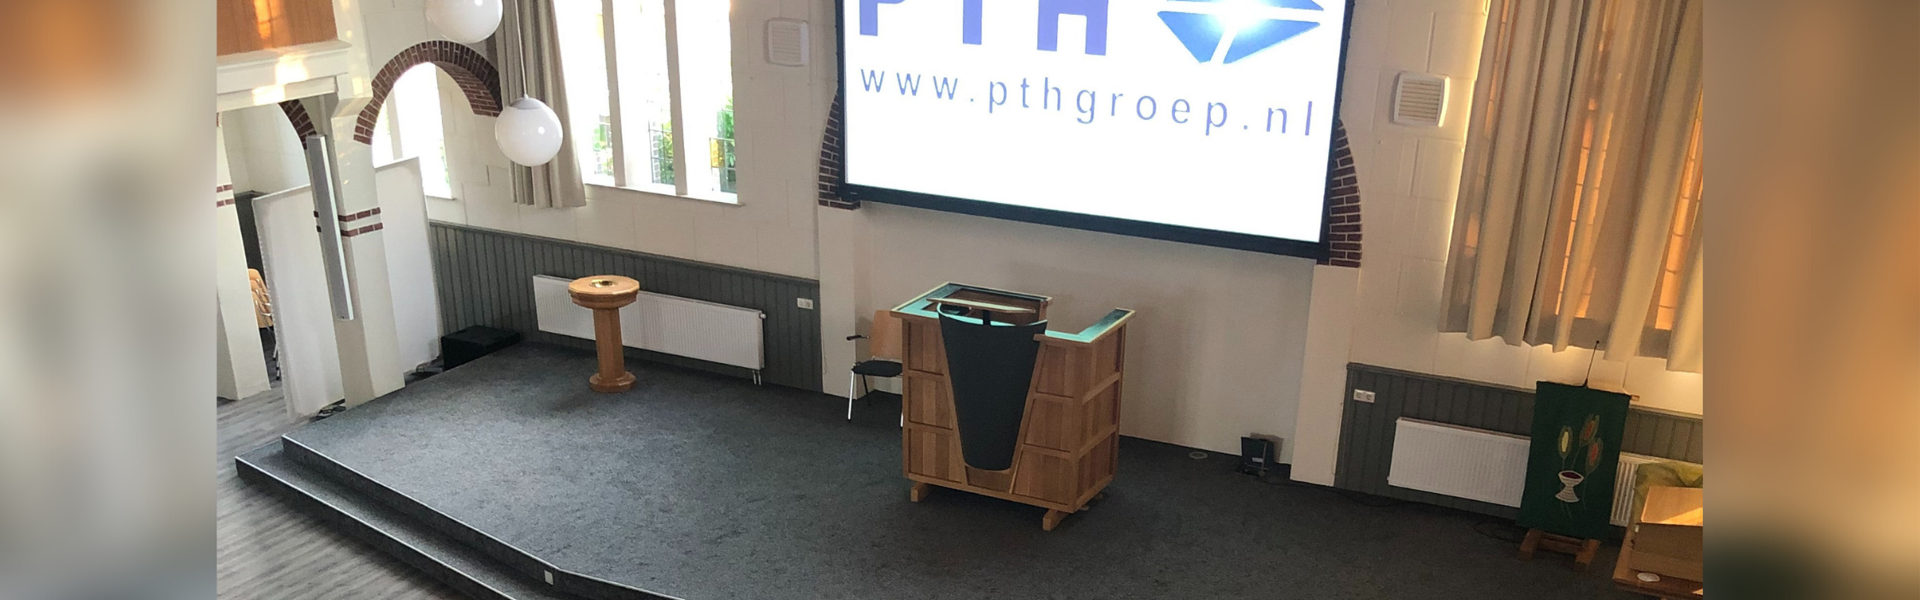 PTH Groep_Project PKN